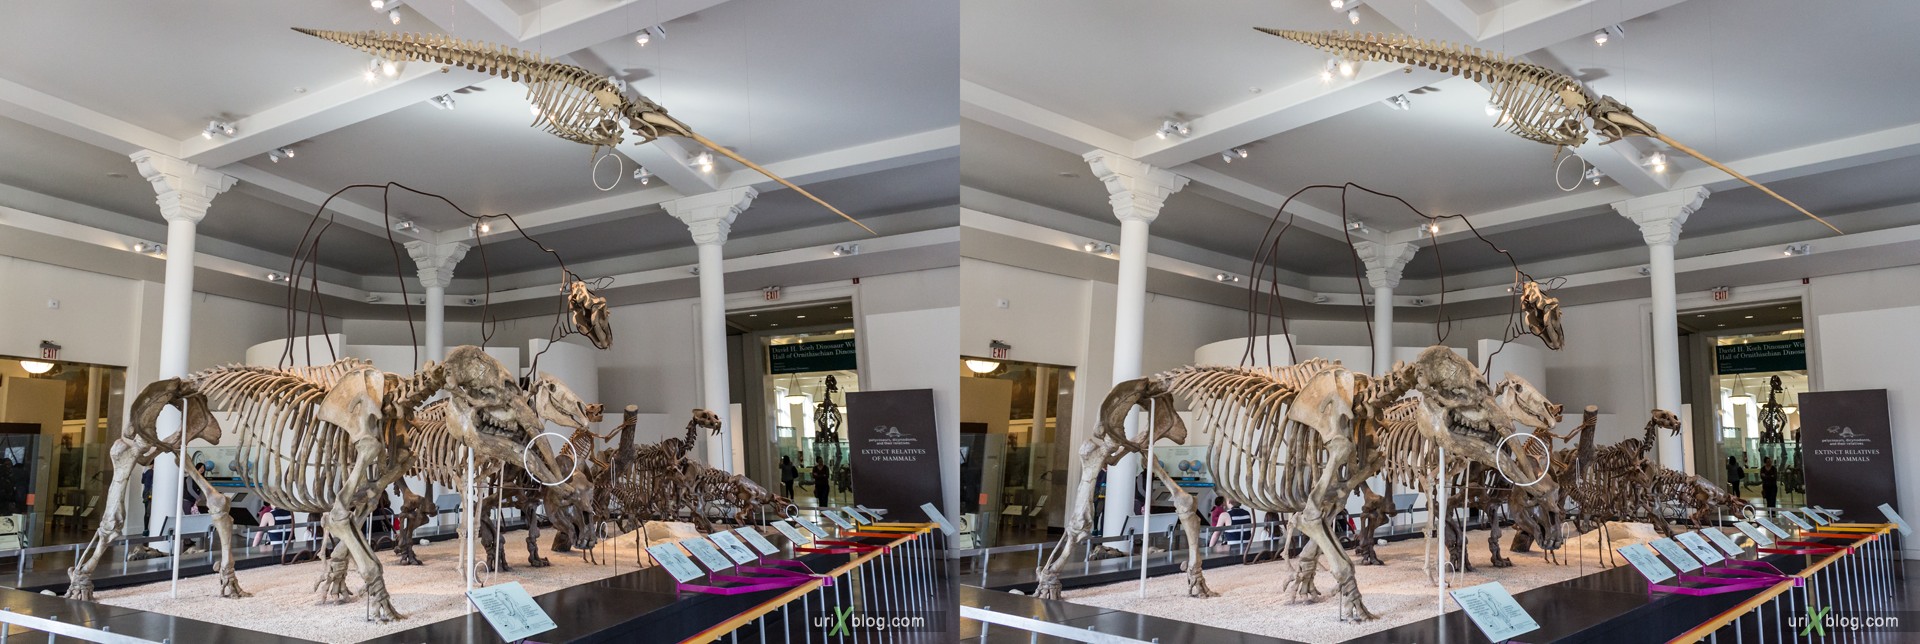 2013, American Museum of Natural History, NYC, New York City, USA, animal, dinosaur, skeleton, 3D, stereo pair, cross-eyed, crossview, cross view stereo pair, stereoscopic